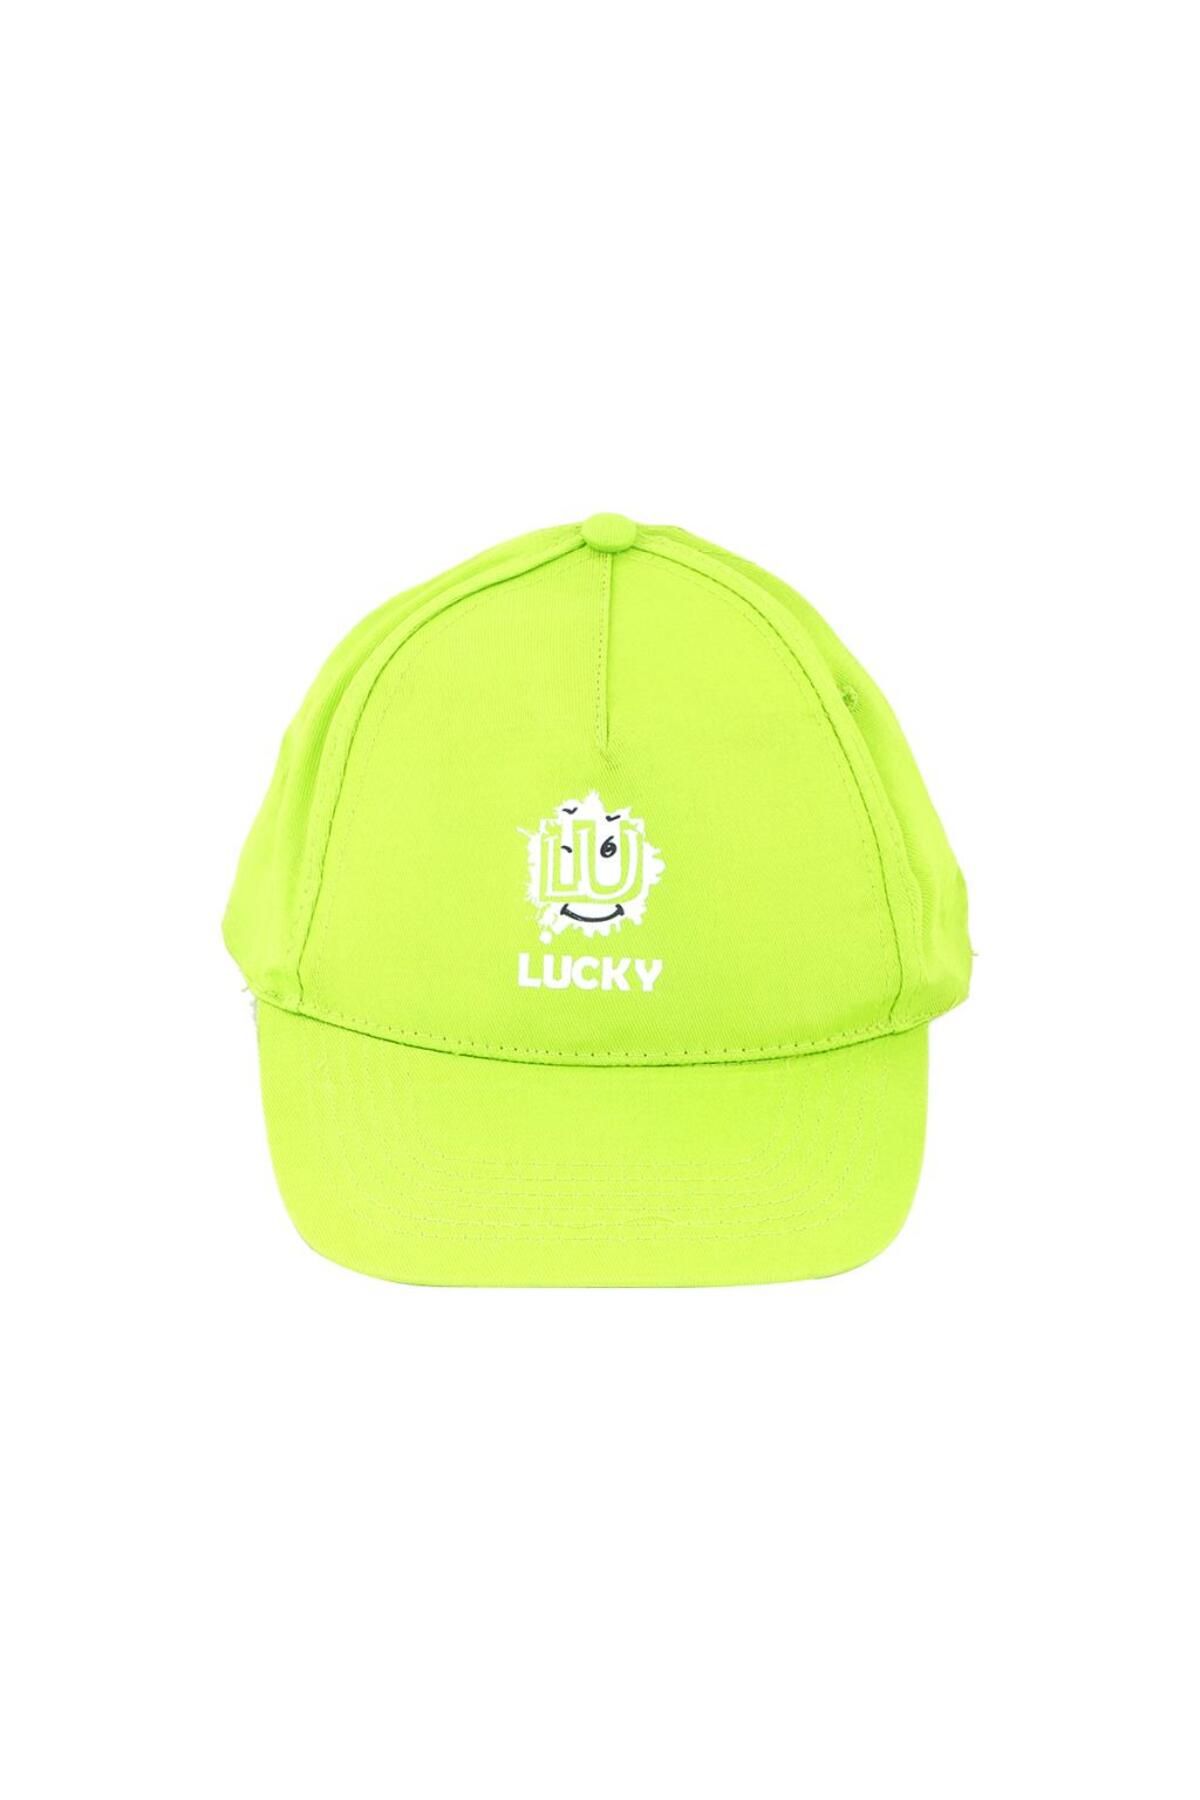 Biggdesign Moods Up Lucky Yeşil Şapka